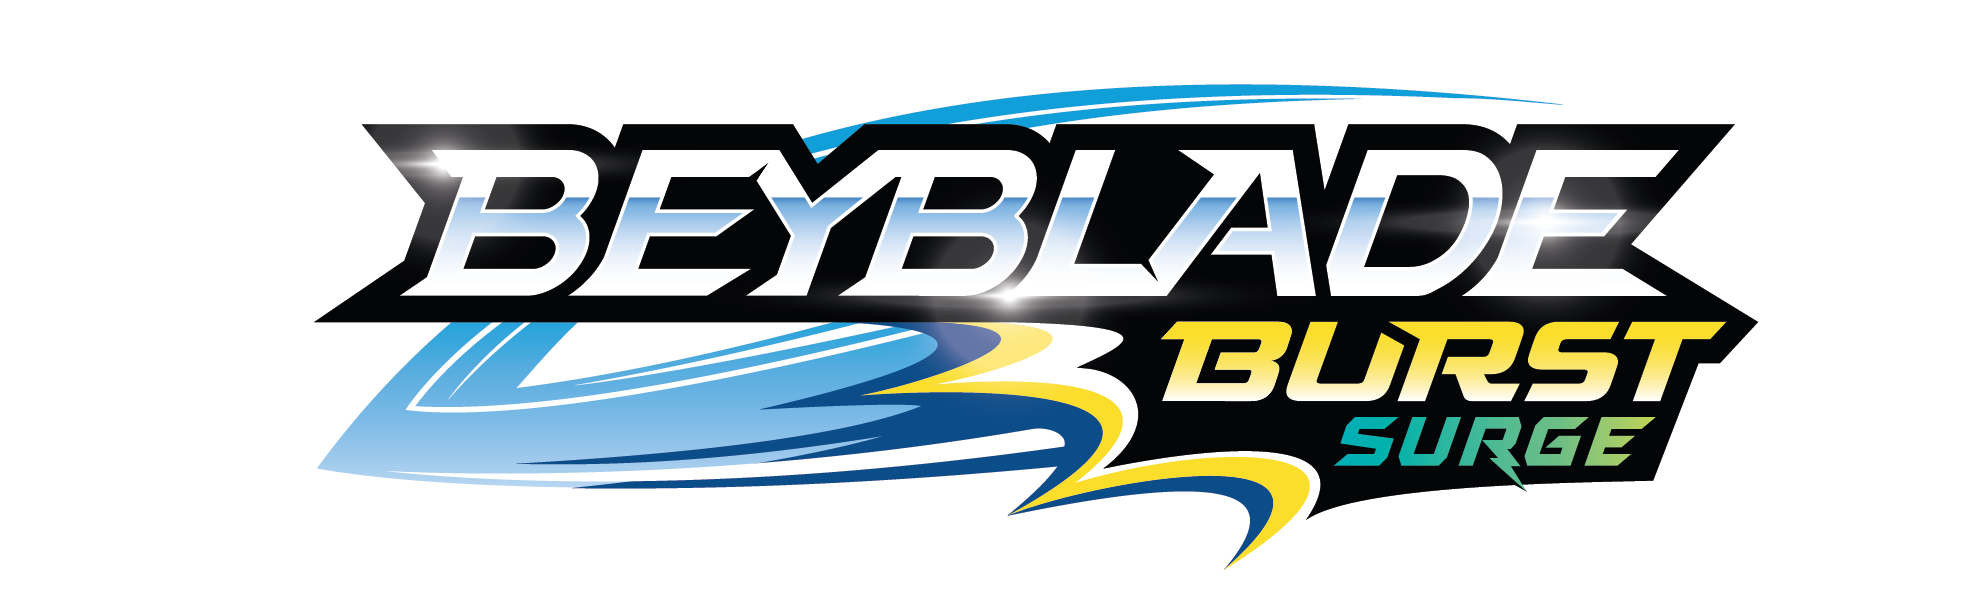 beyblade burst logo